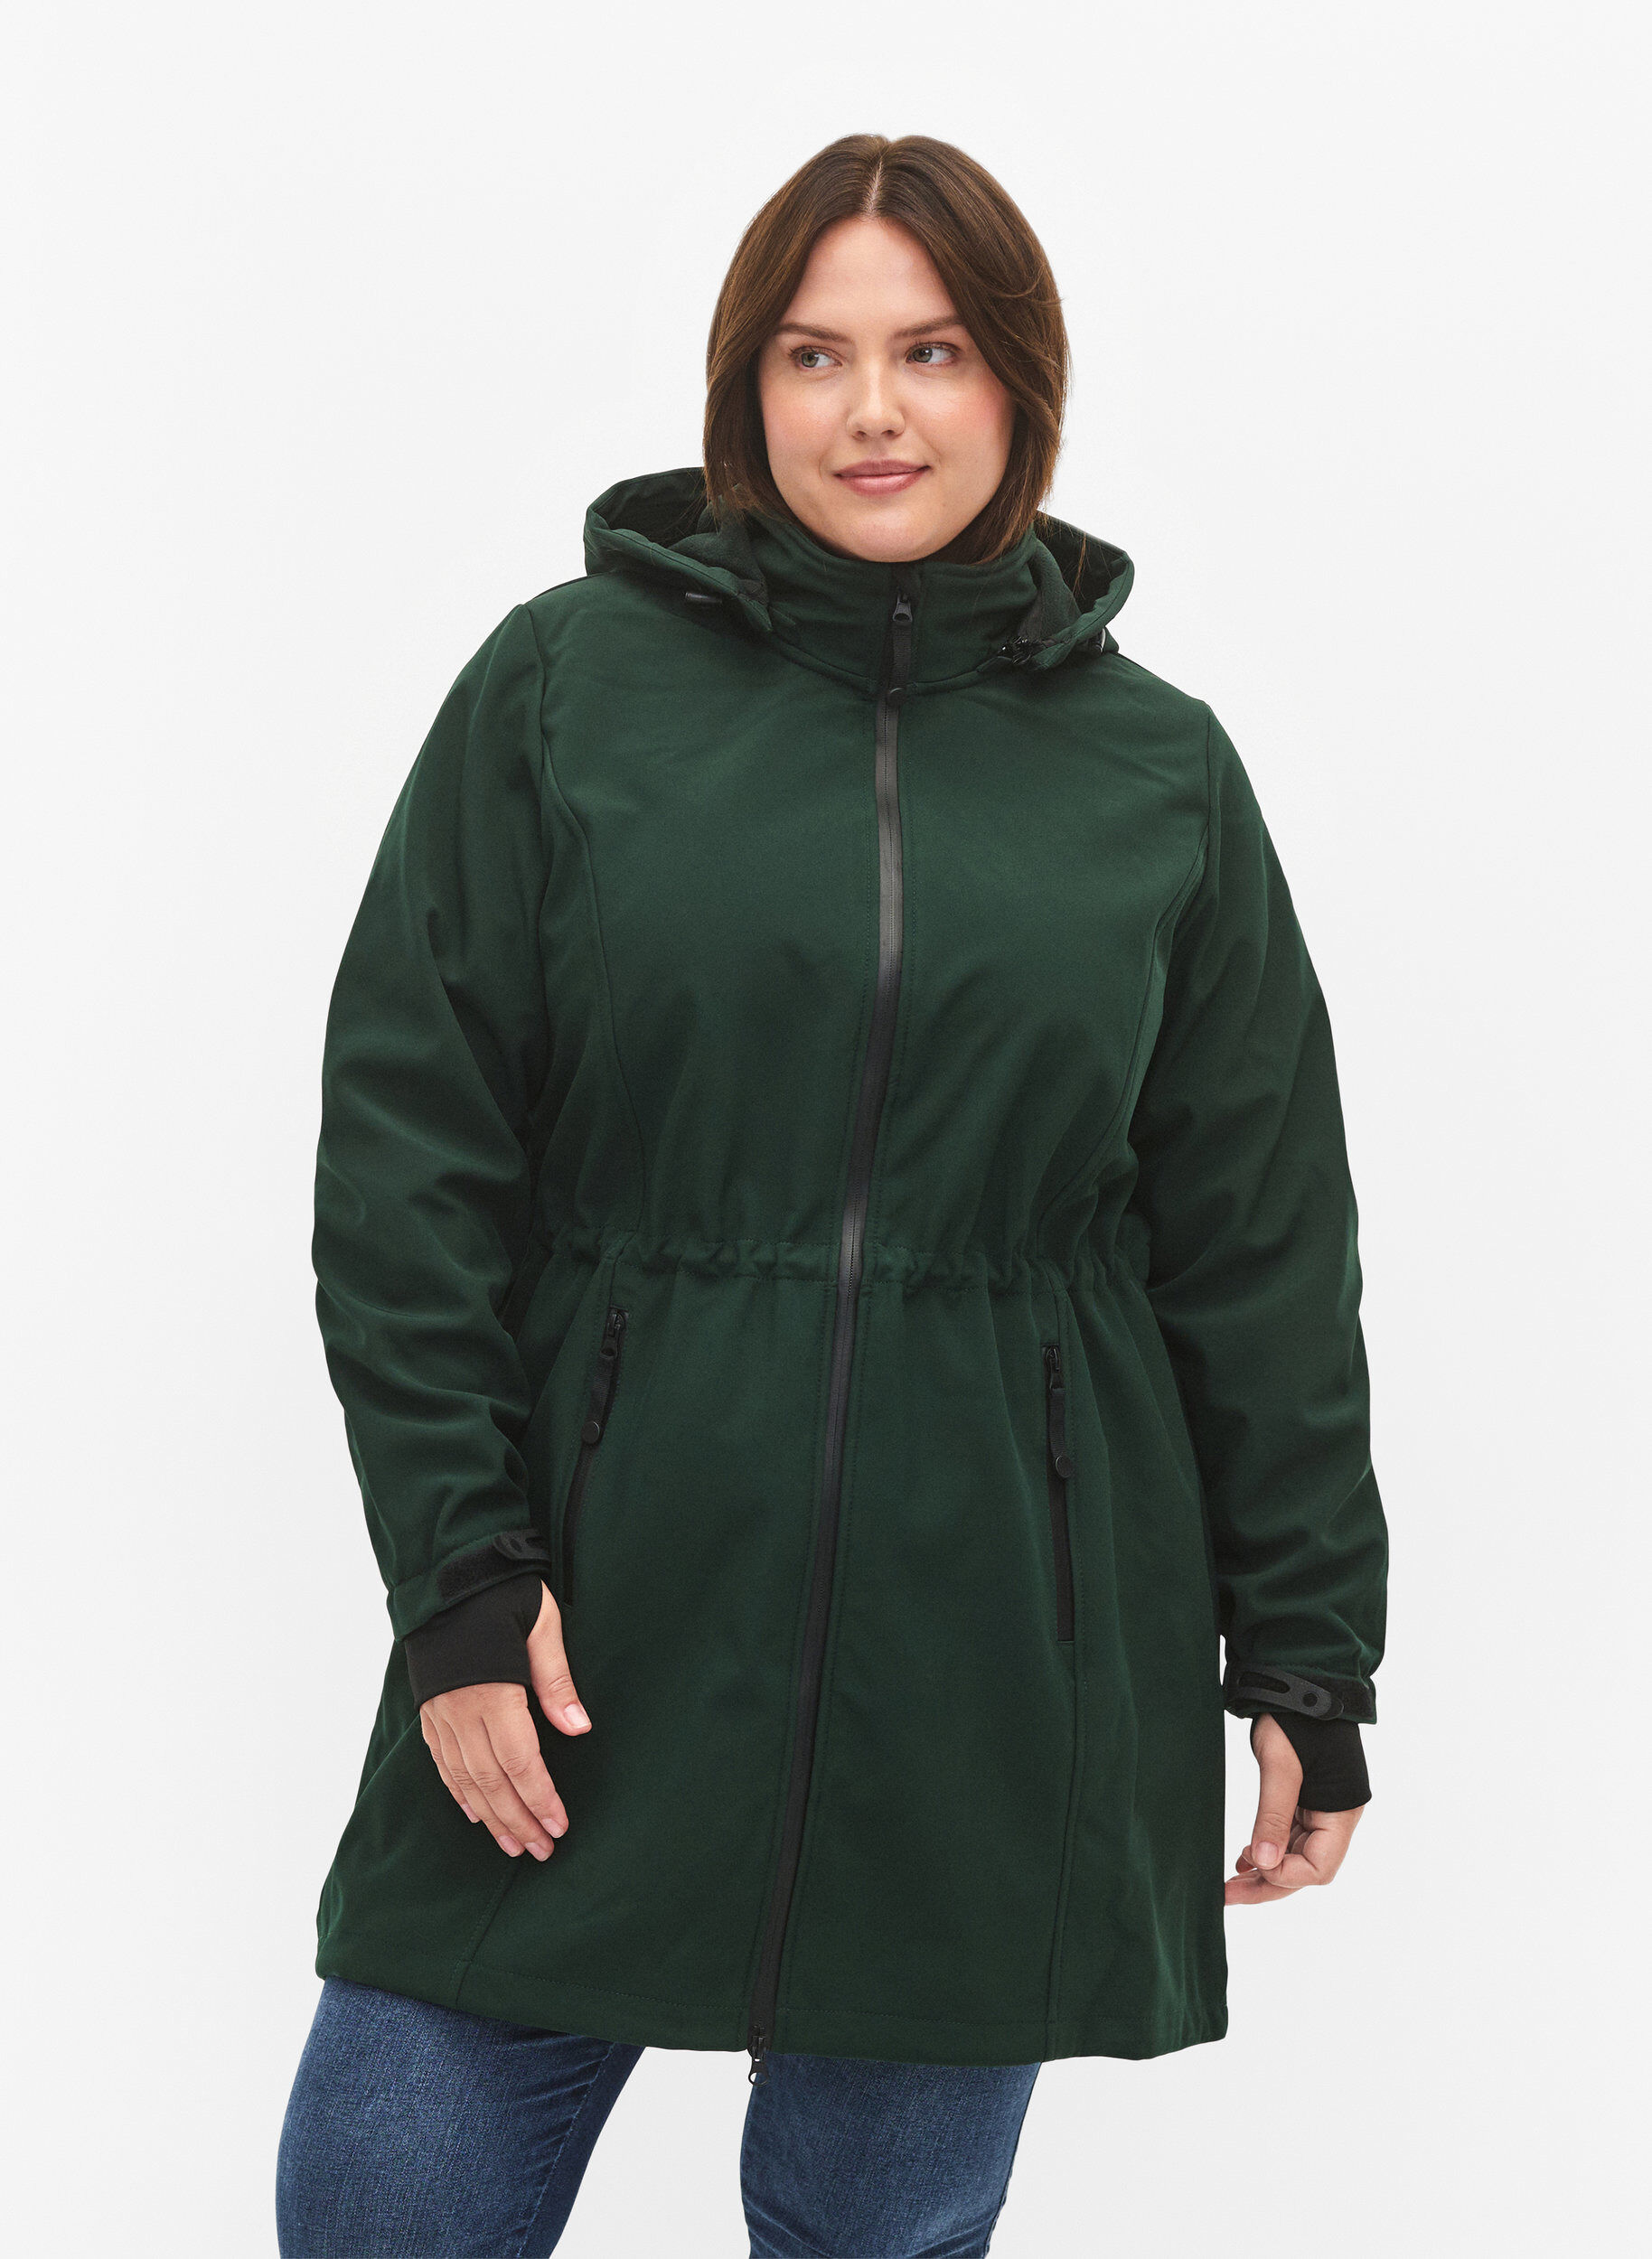 Women's Plus size Winter jackets (42-64) - Zizzifashion